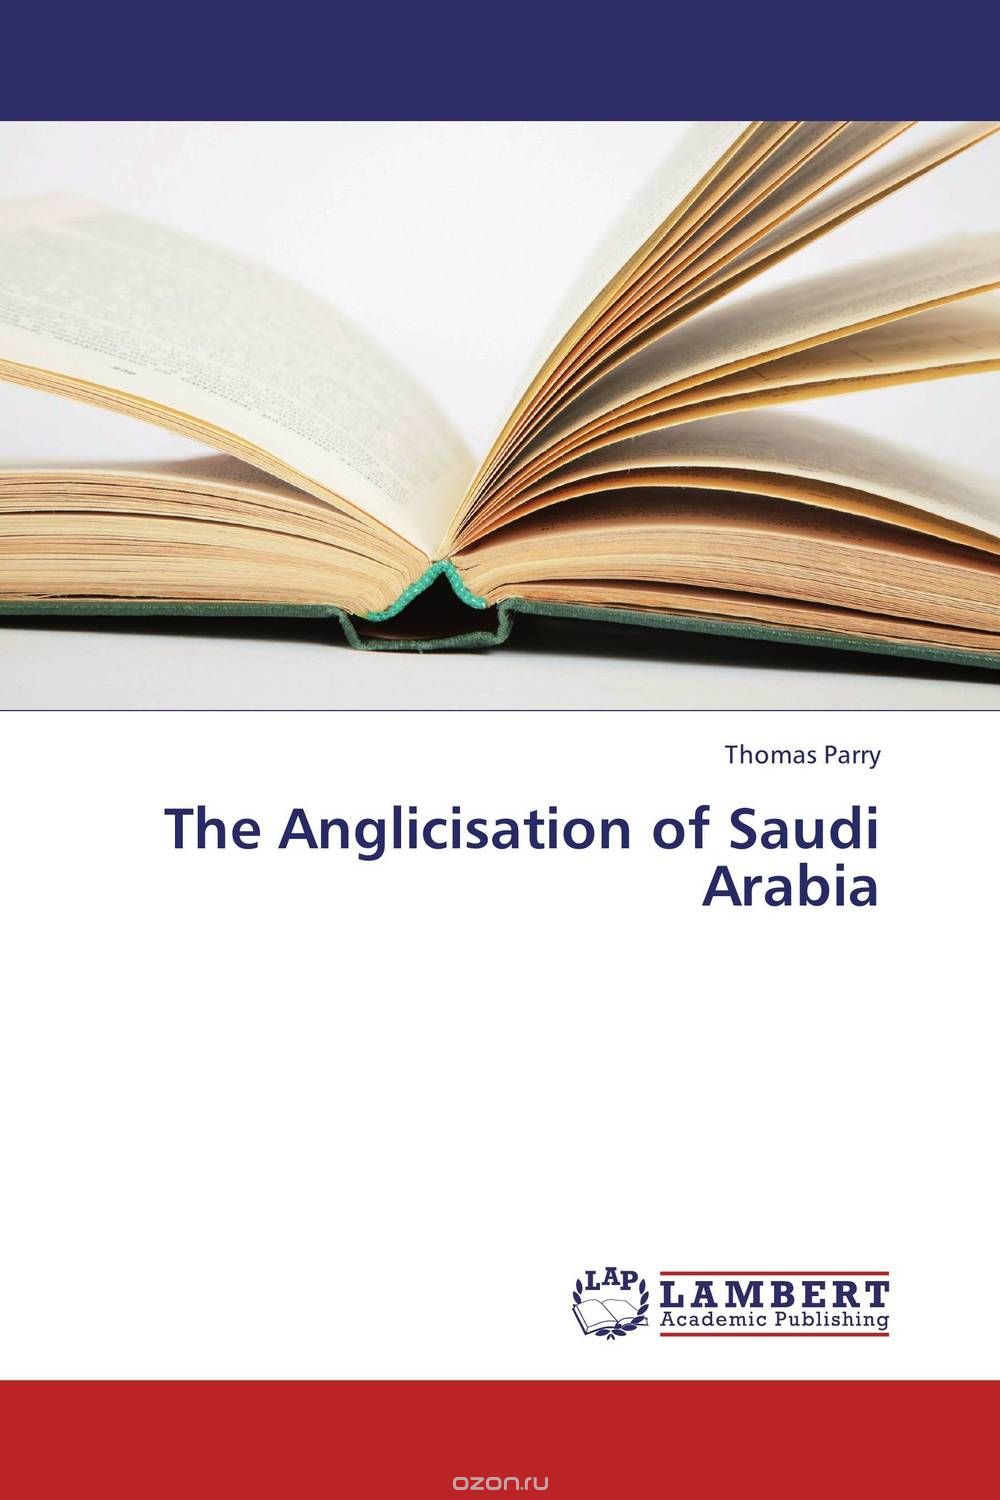 Скачать книгу "The Anglicisation of Saudi Arabia"